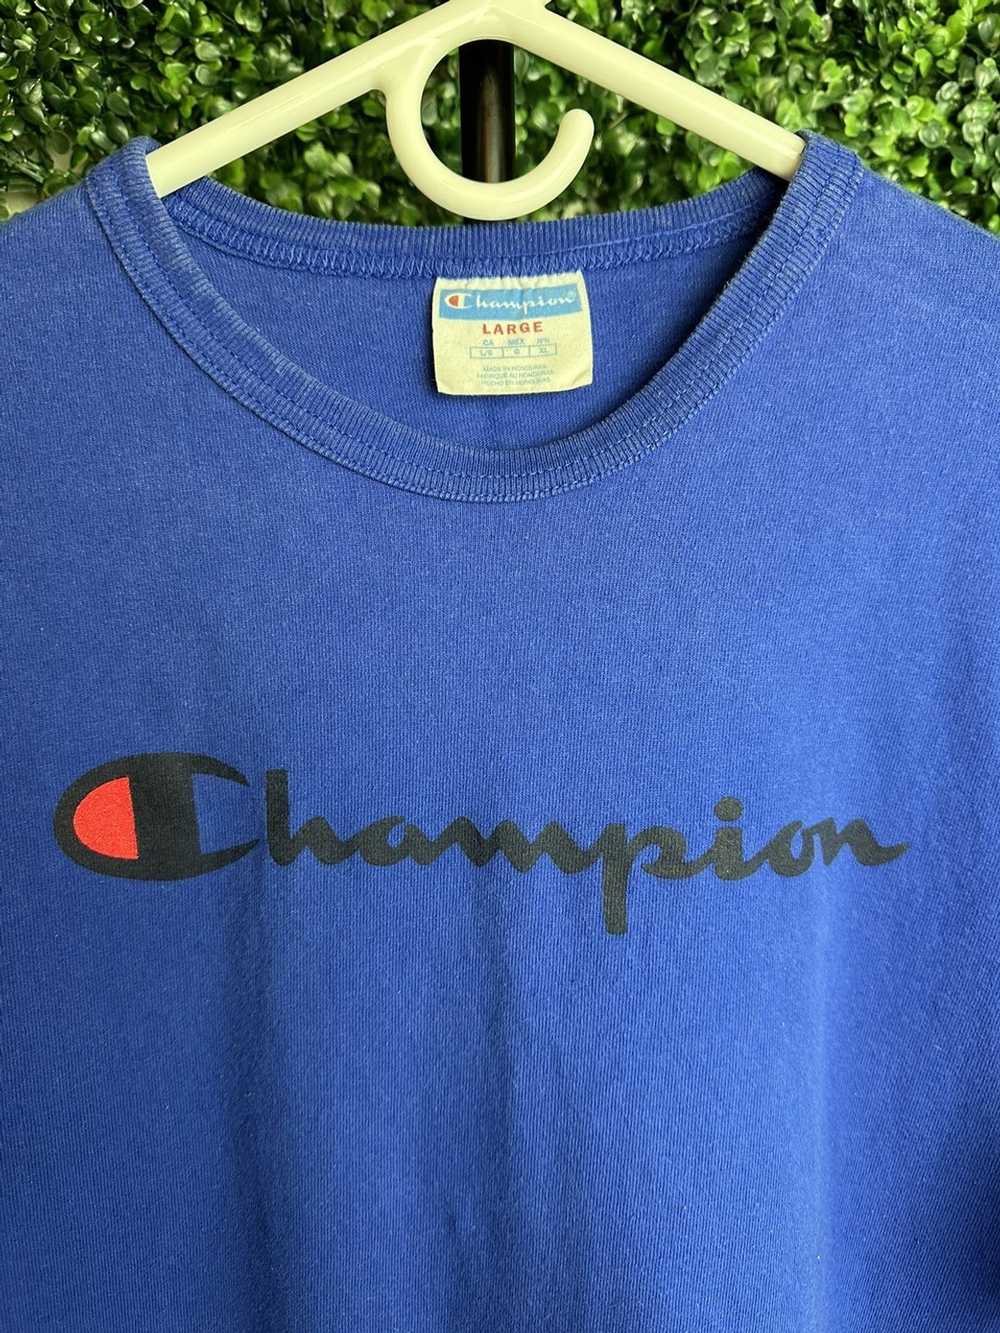 Champion Vintage 90s Champion logo Graphic T-Shirt - image 3